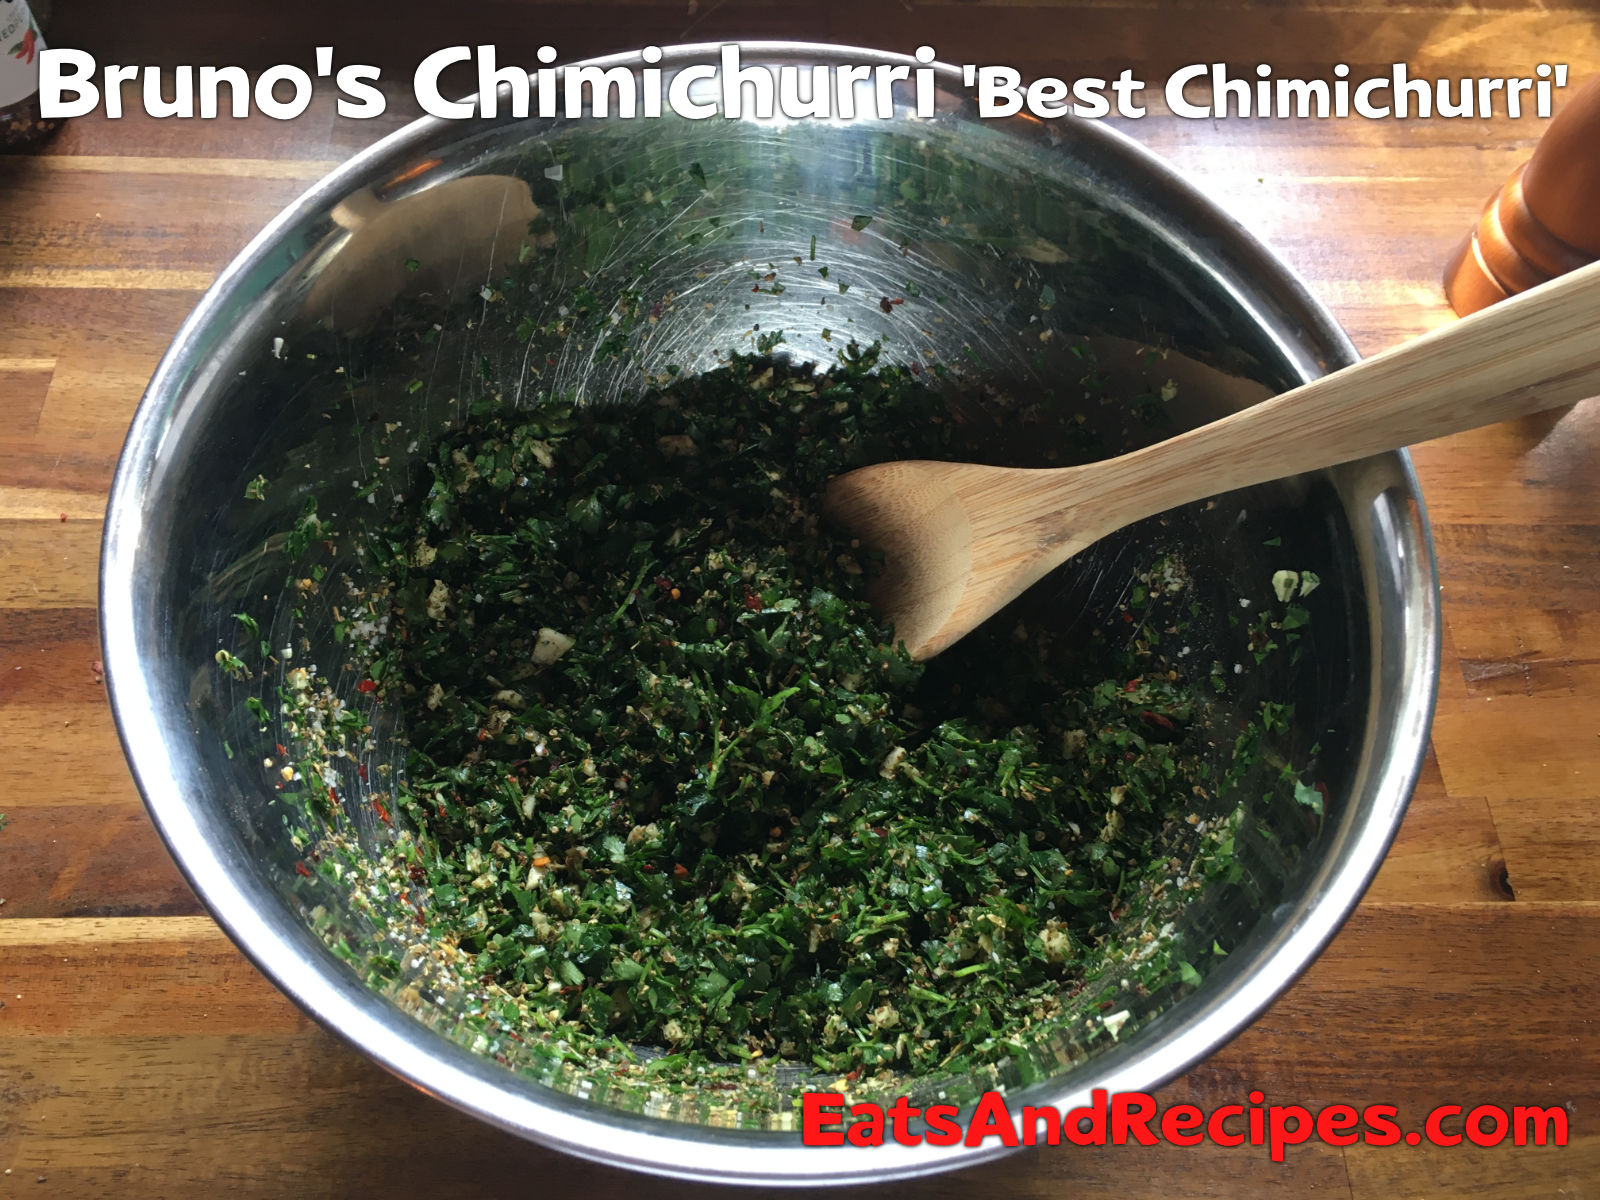 Brunos Chimichurri Best Chimichurri Mix Ingredients